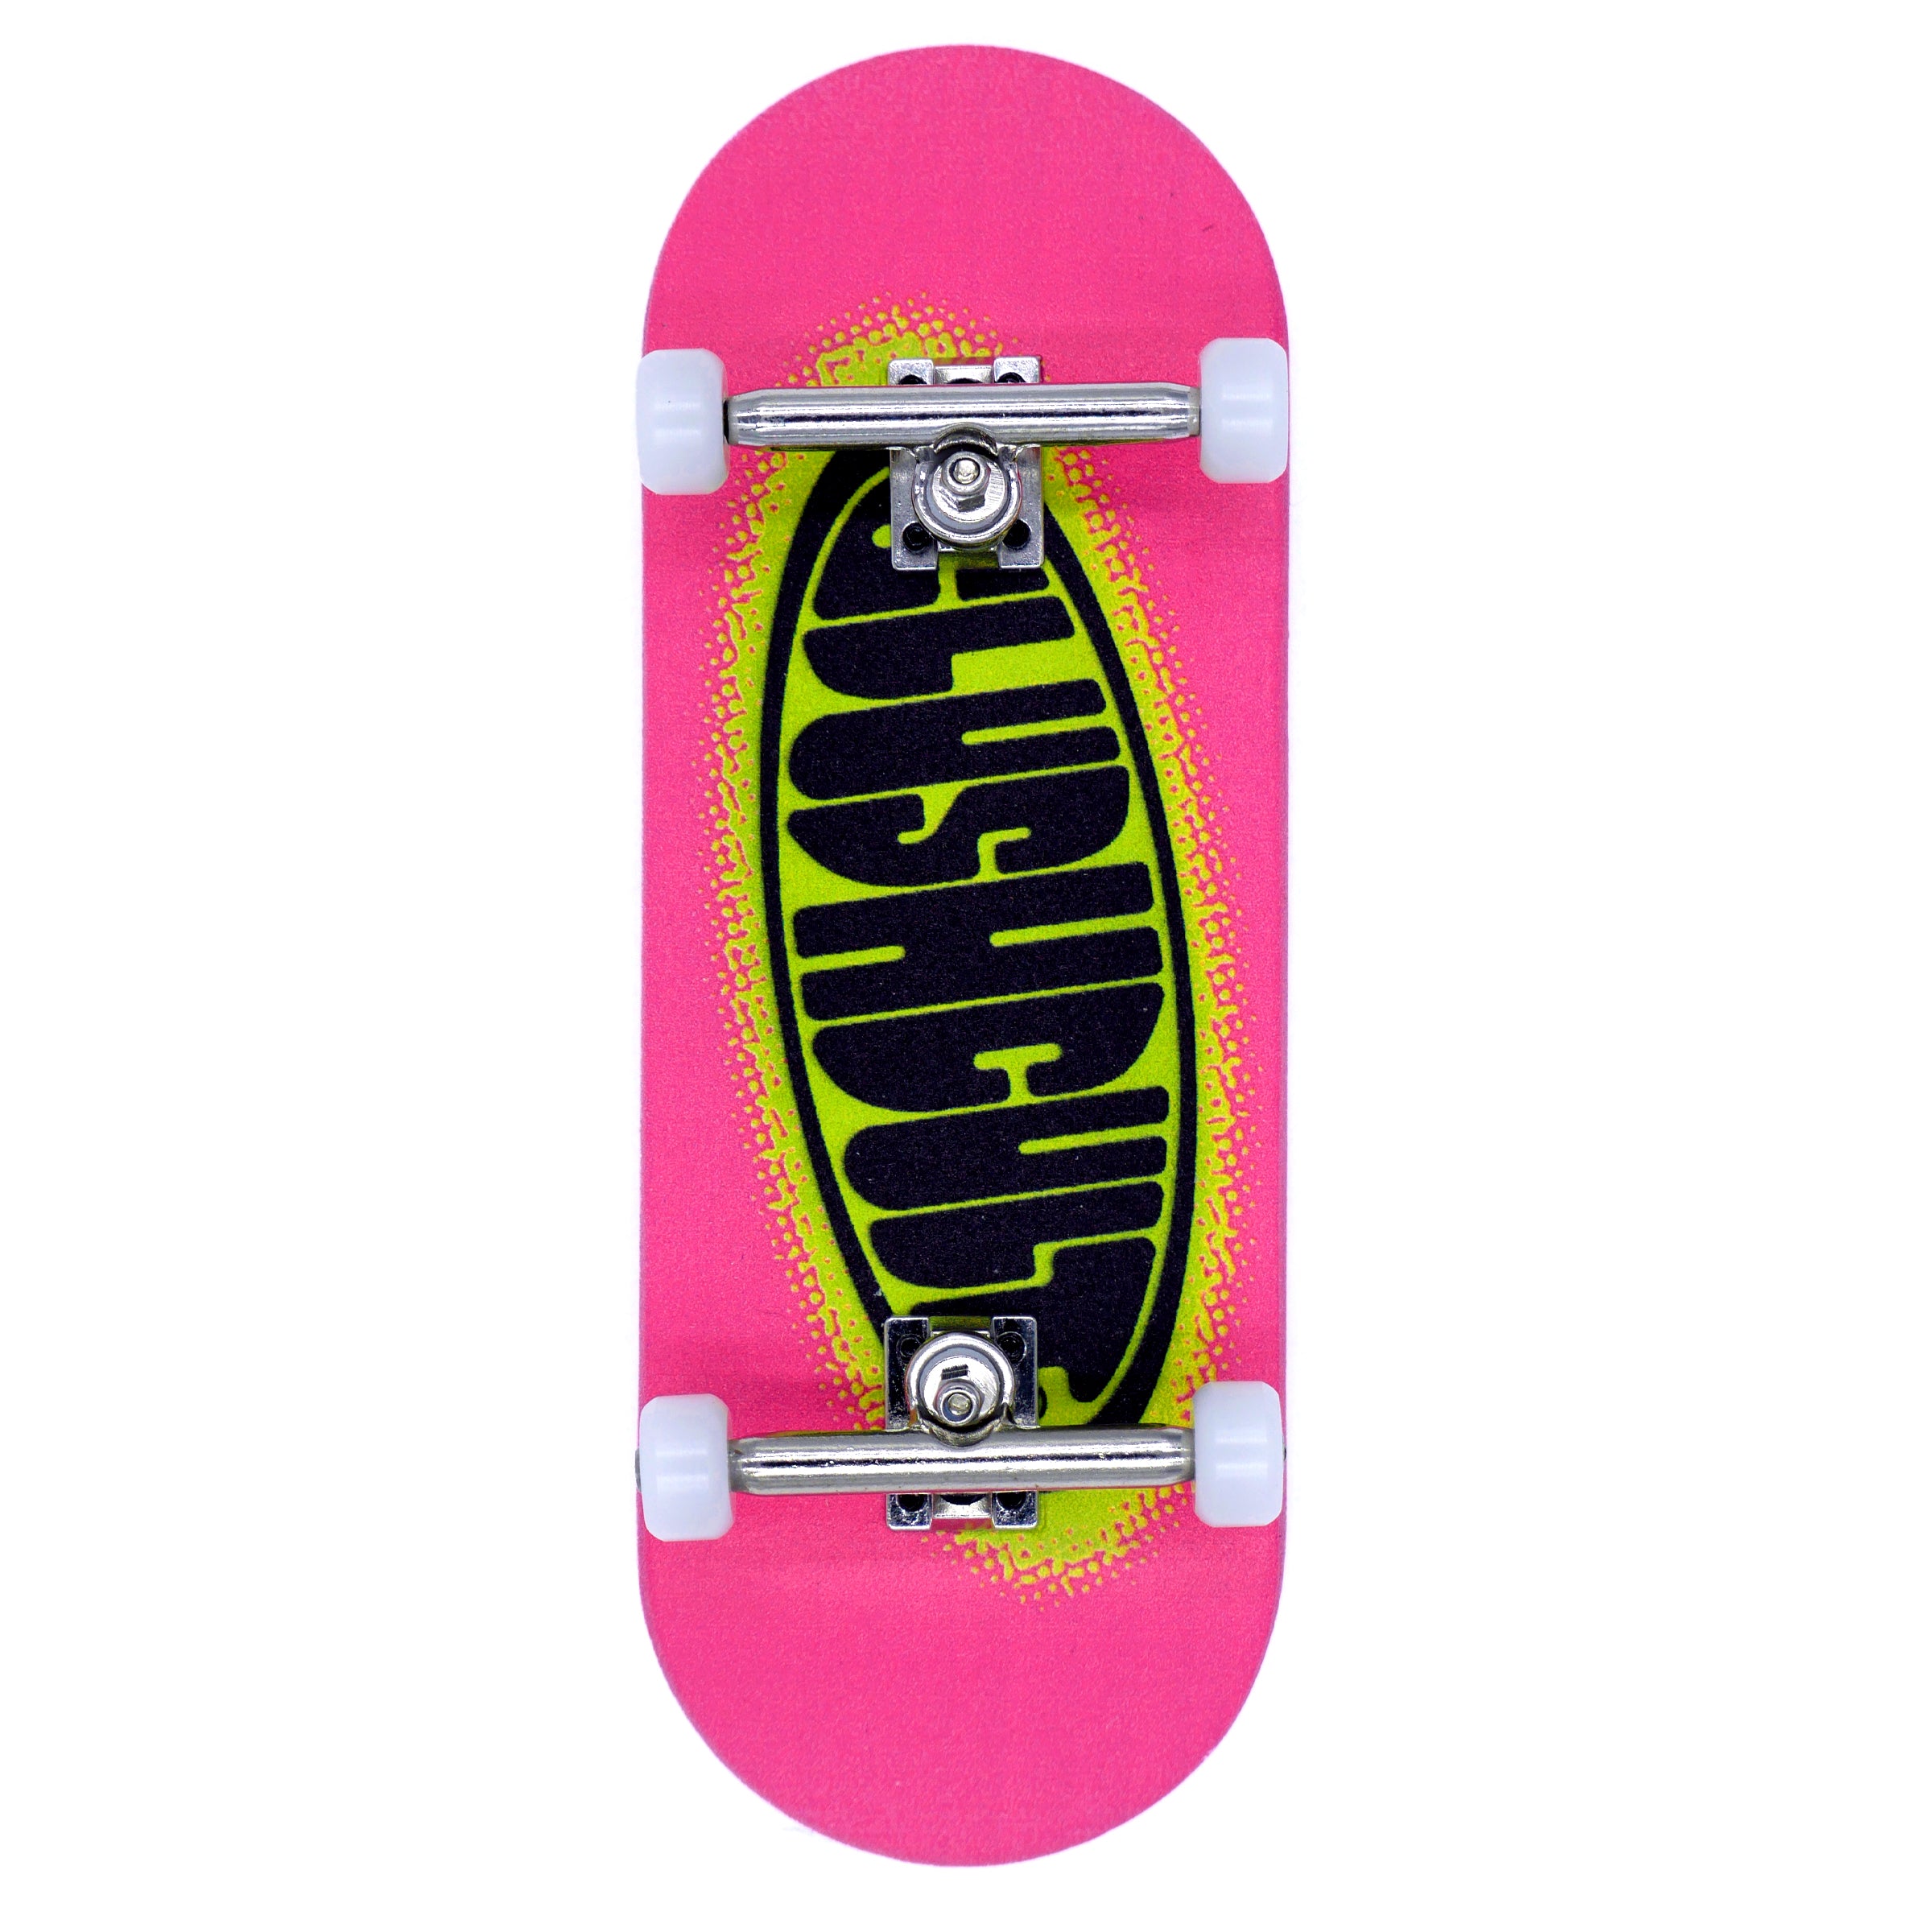 Slushcult Grom Series 007 Fingerboard Complete - Over Spray Pink MINI Skate Shop Slushcult    Slushcult